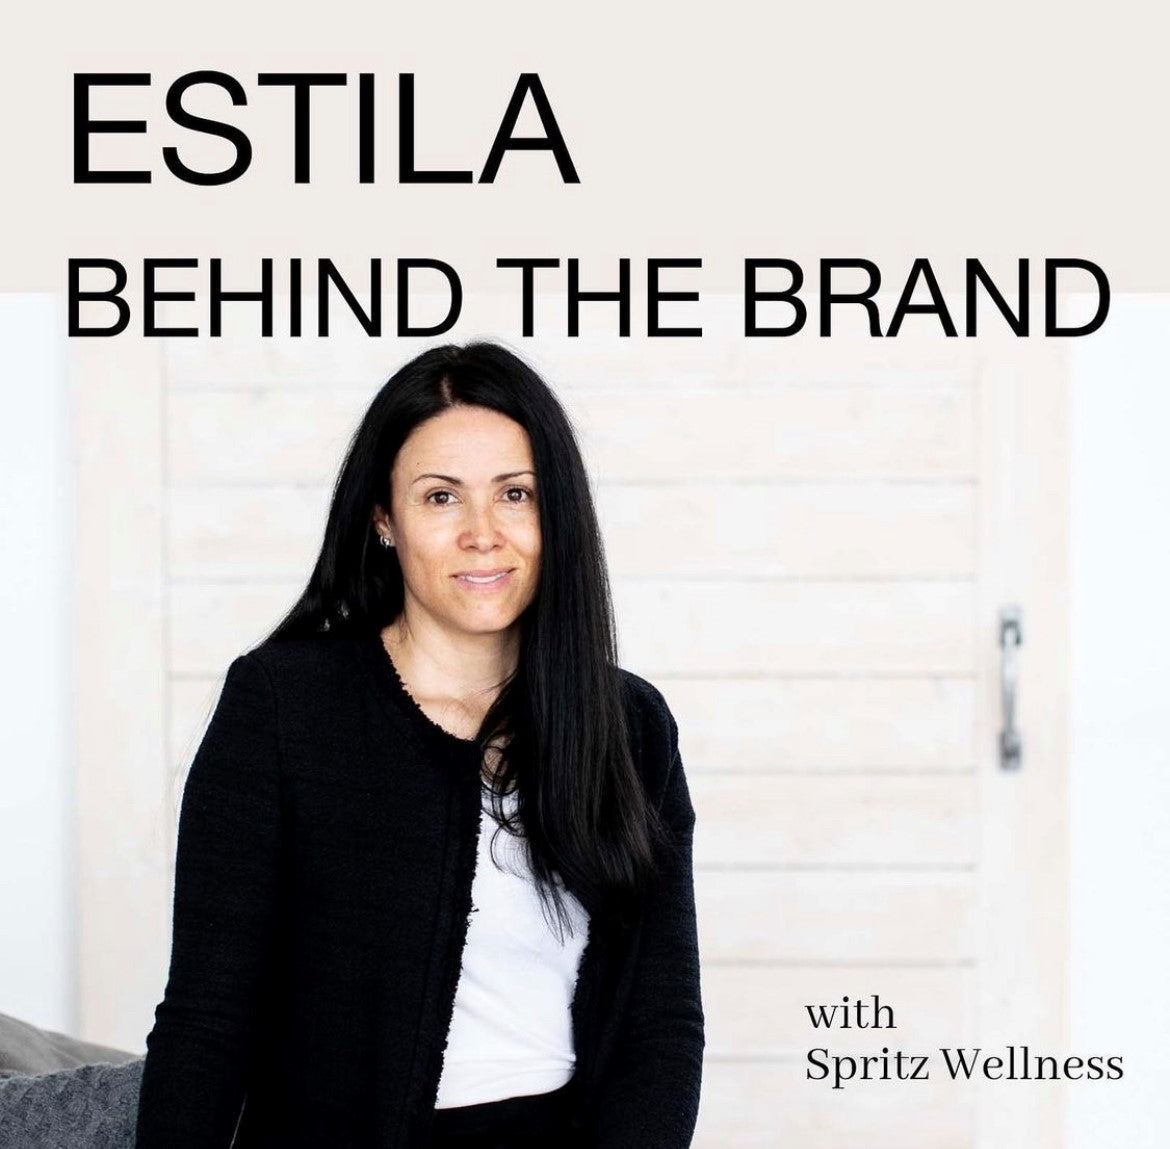 Interview with Estila Magazine